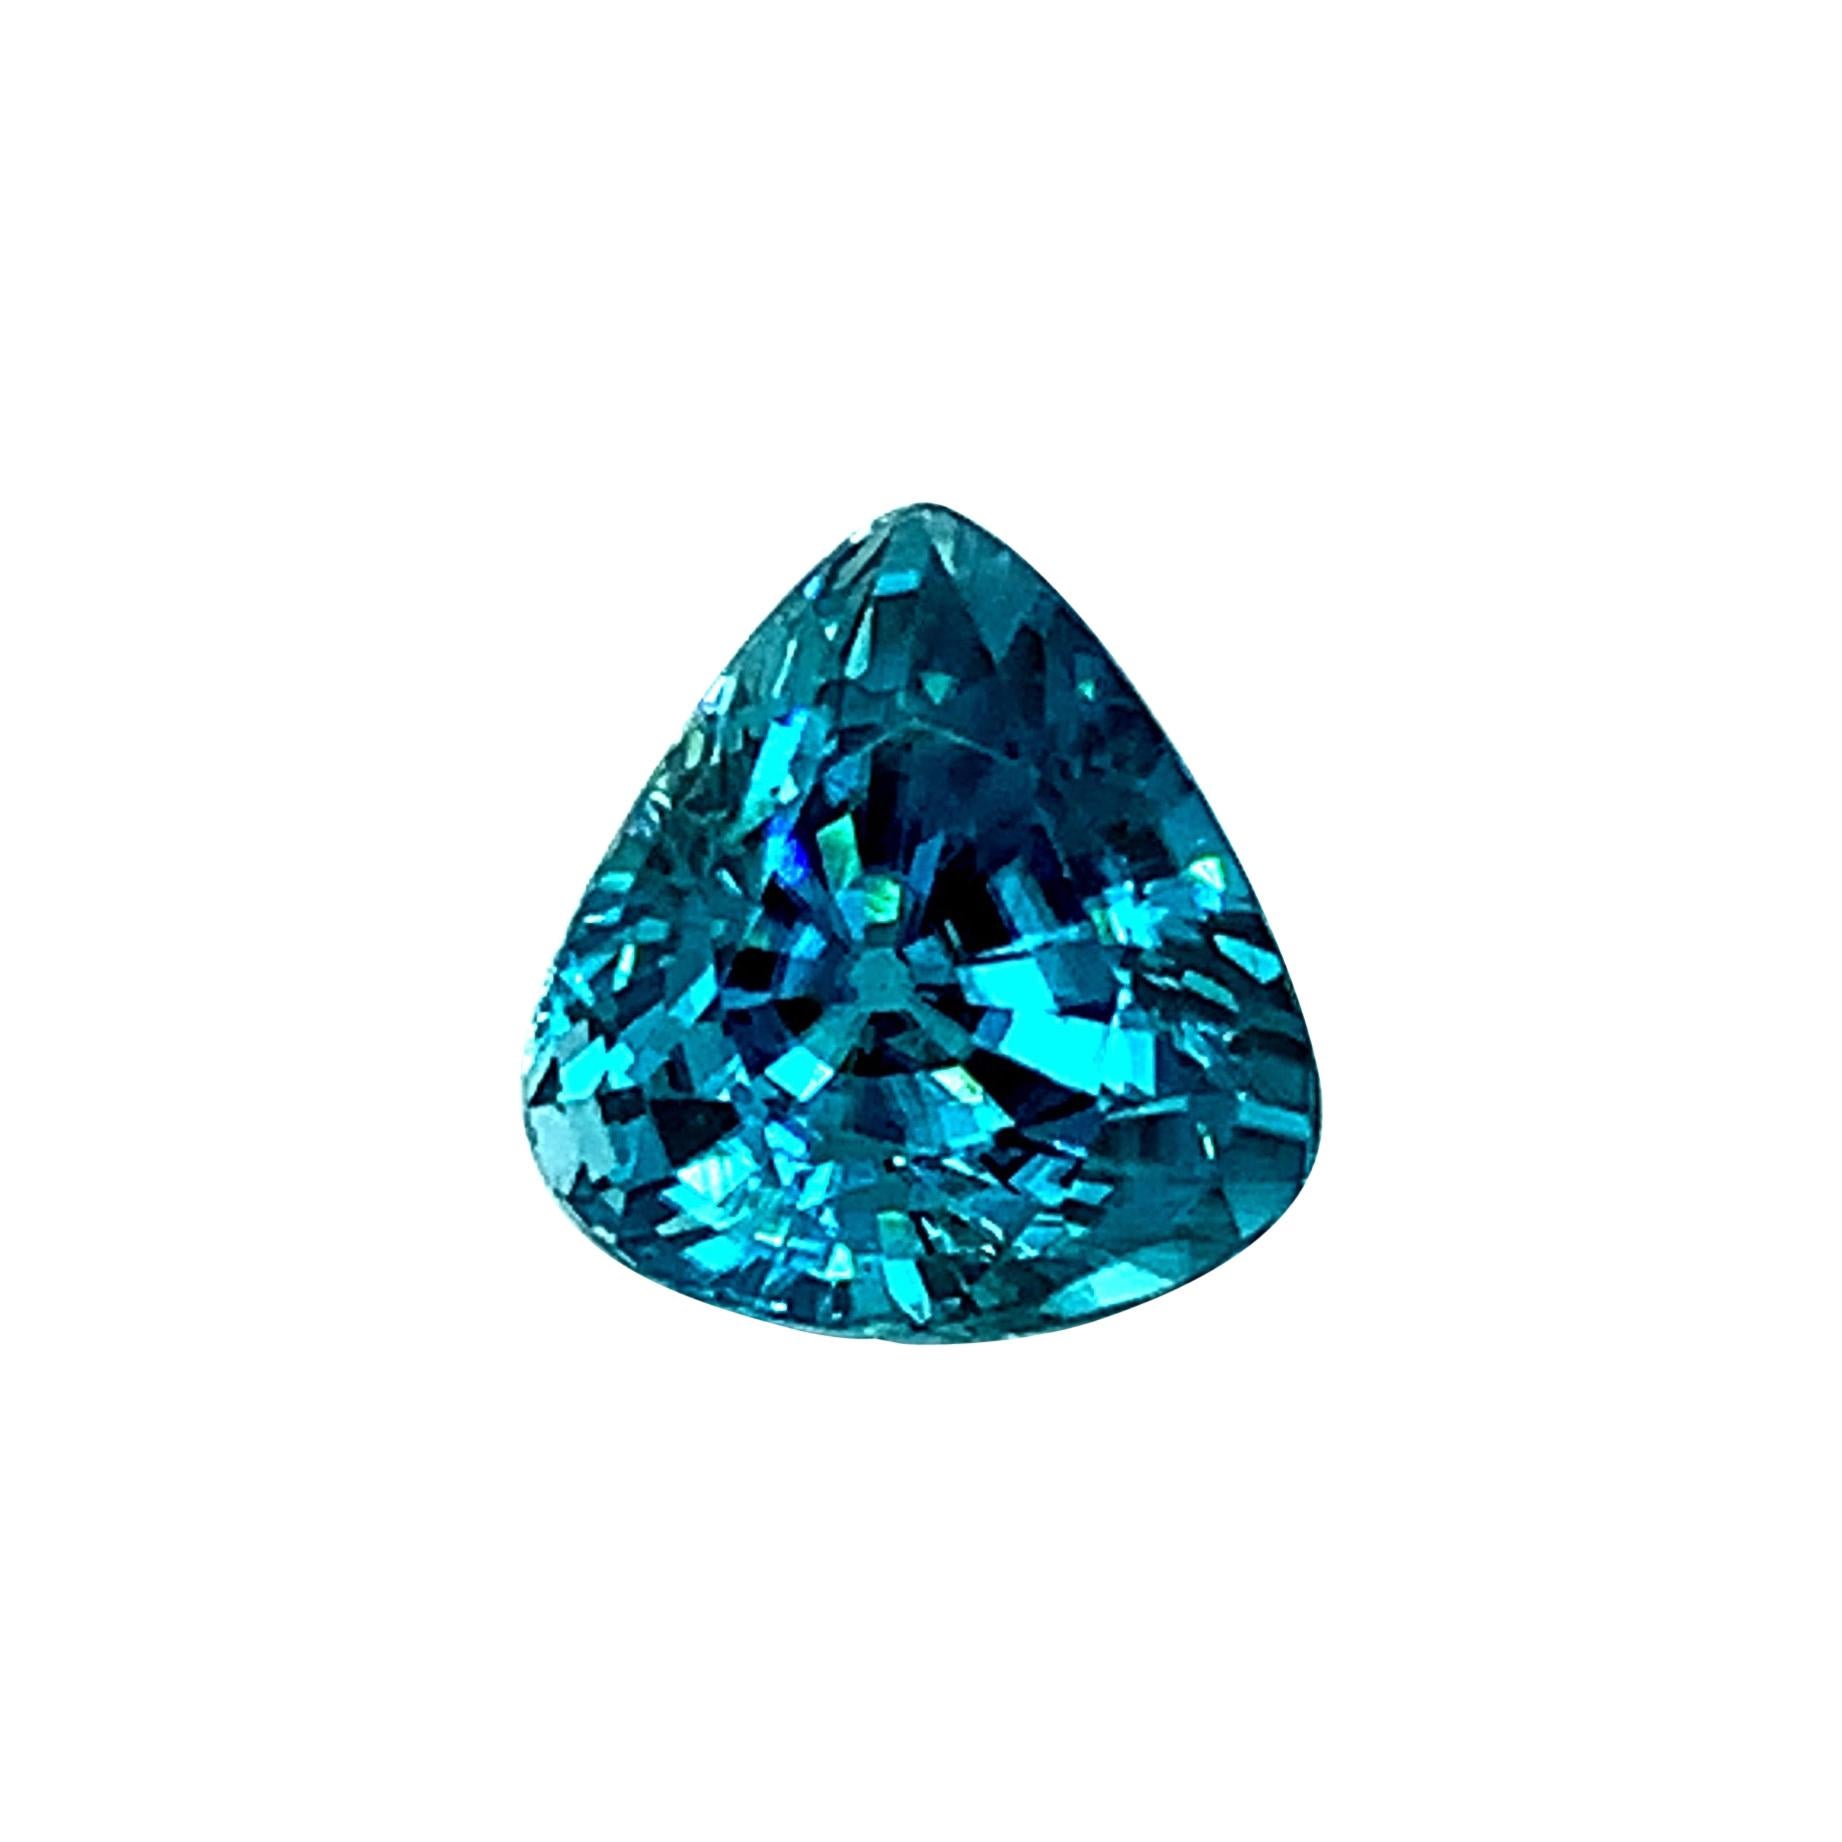 8.46 Carat Trilliant Cut Blue Zircon, Unset Loose Gemstone  